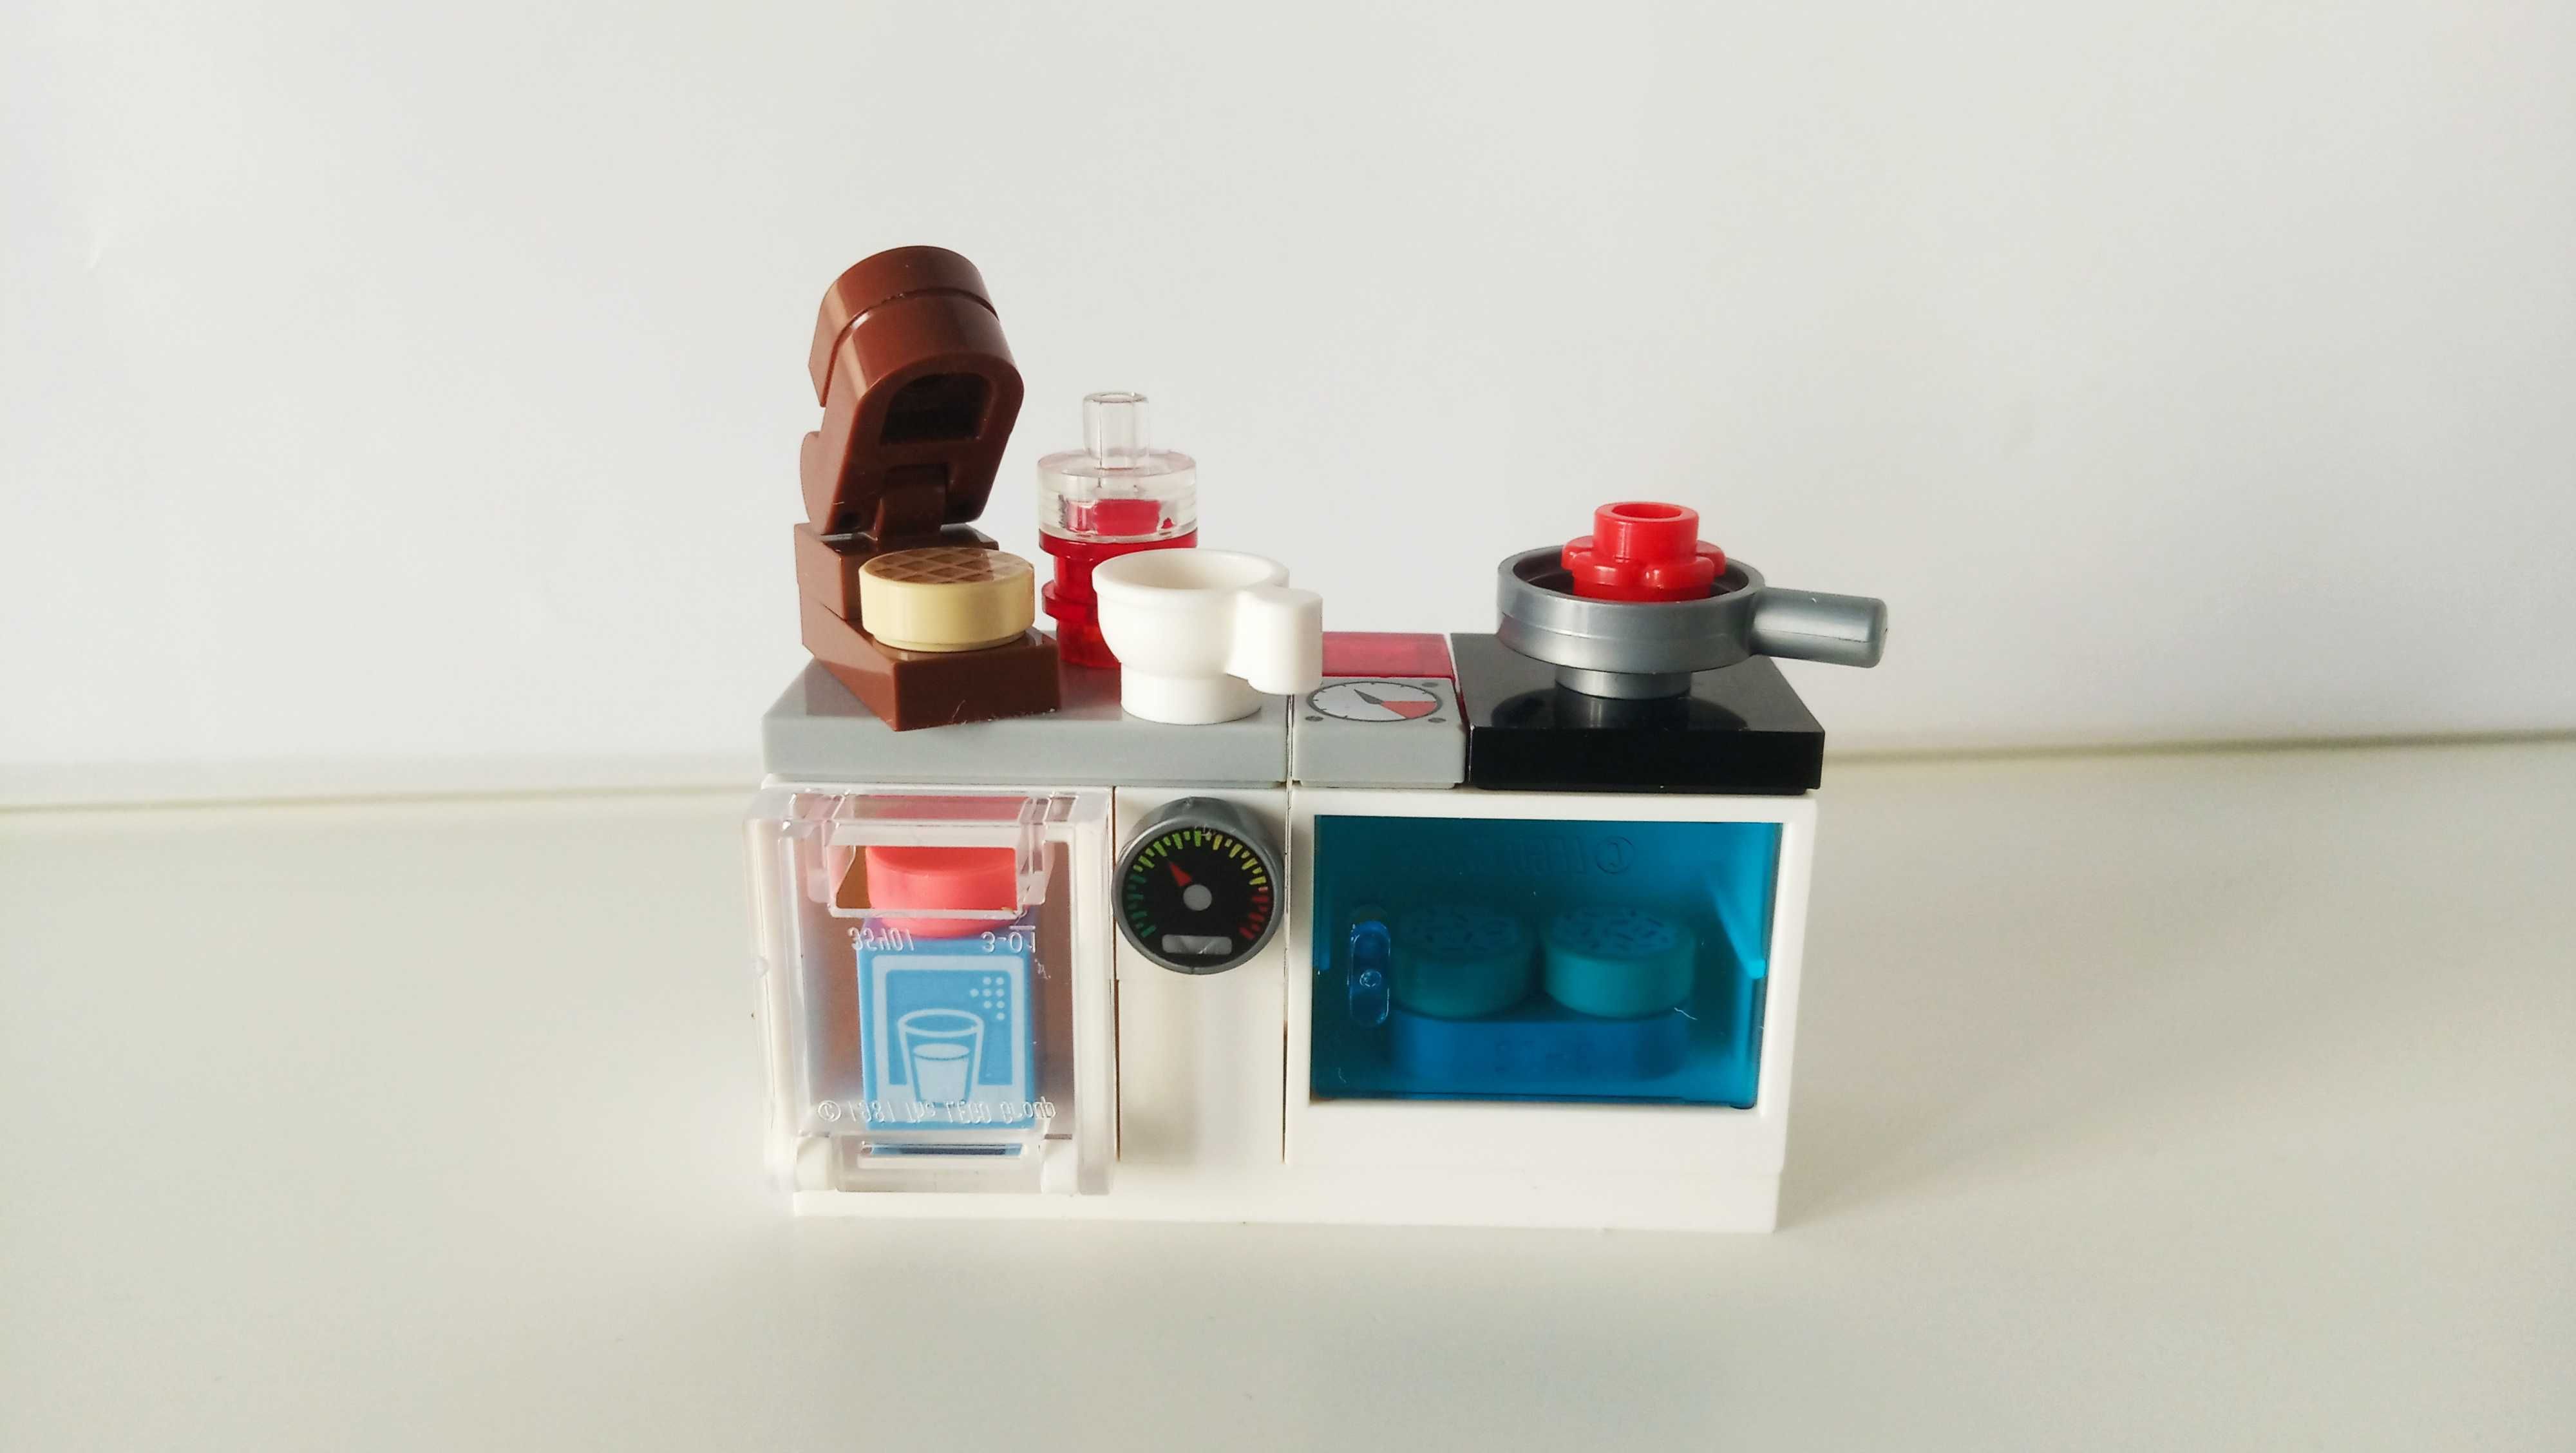 Lego Moc mini-kuchnia